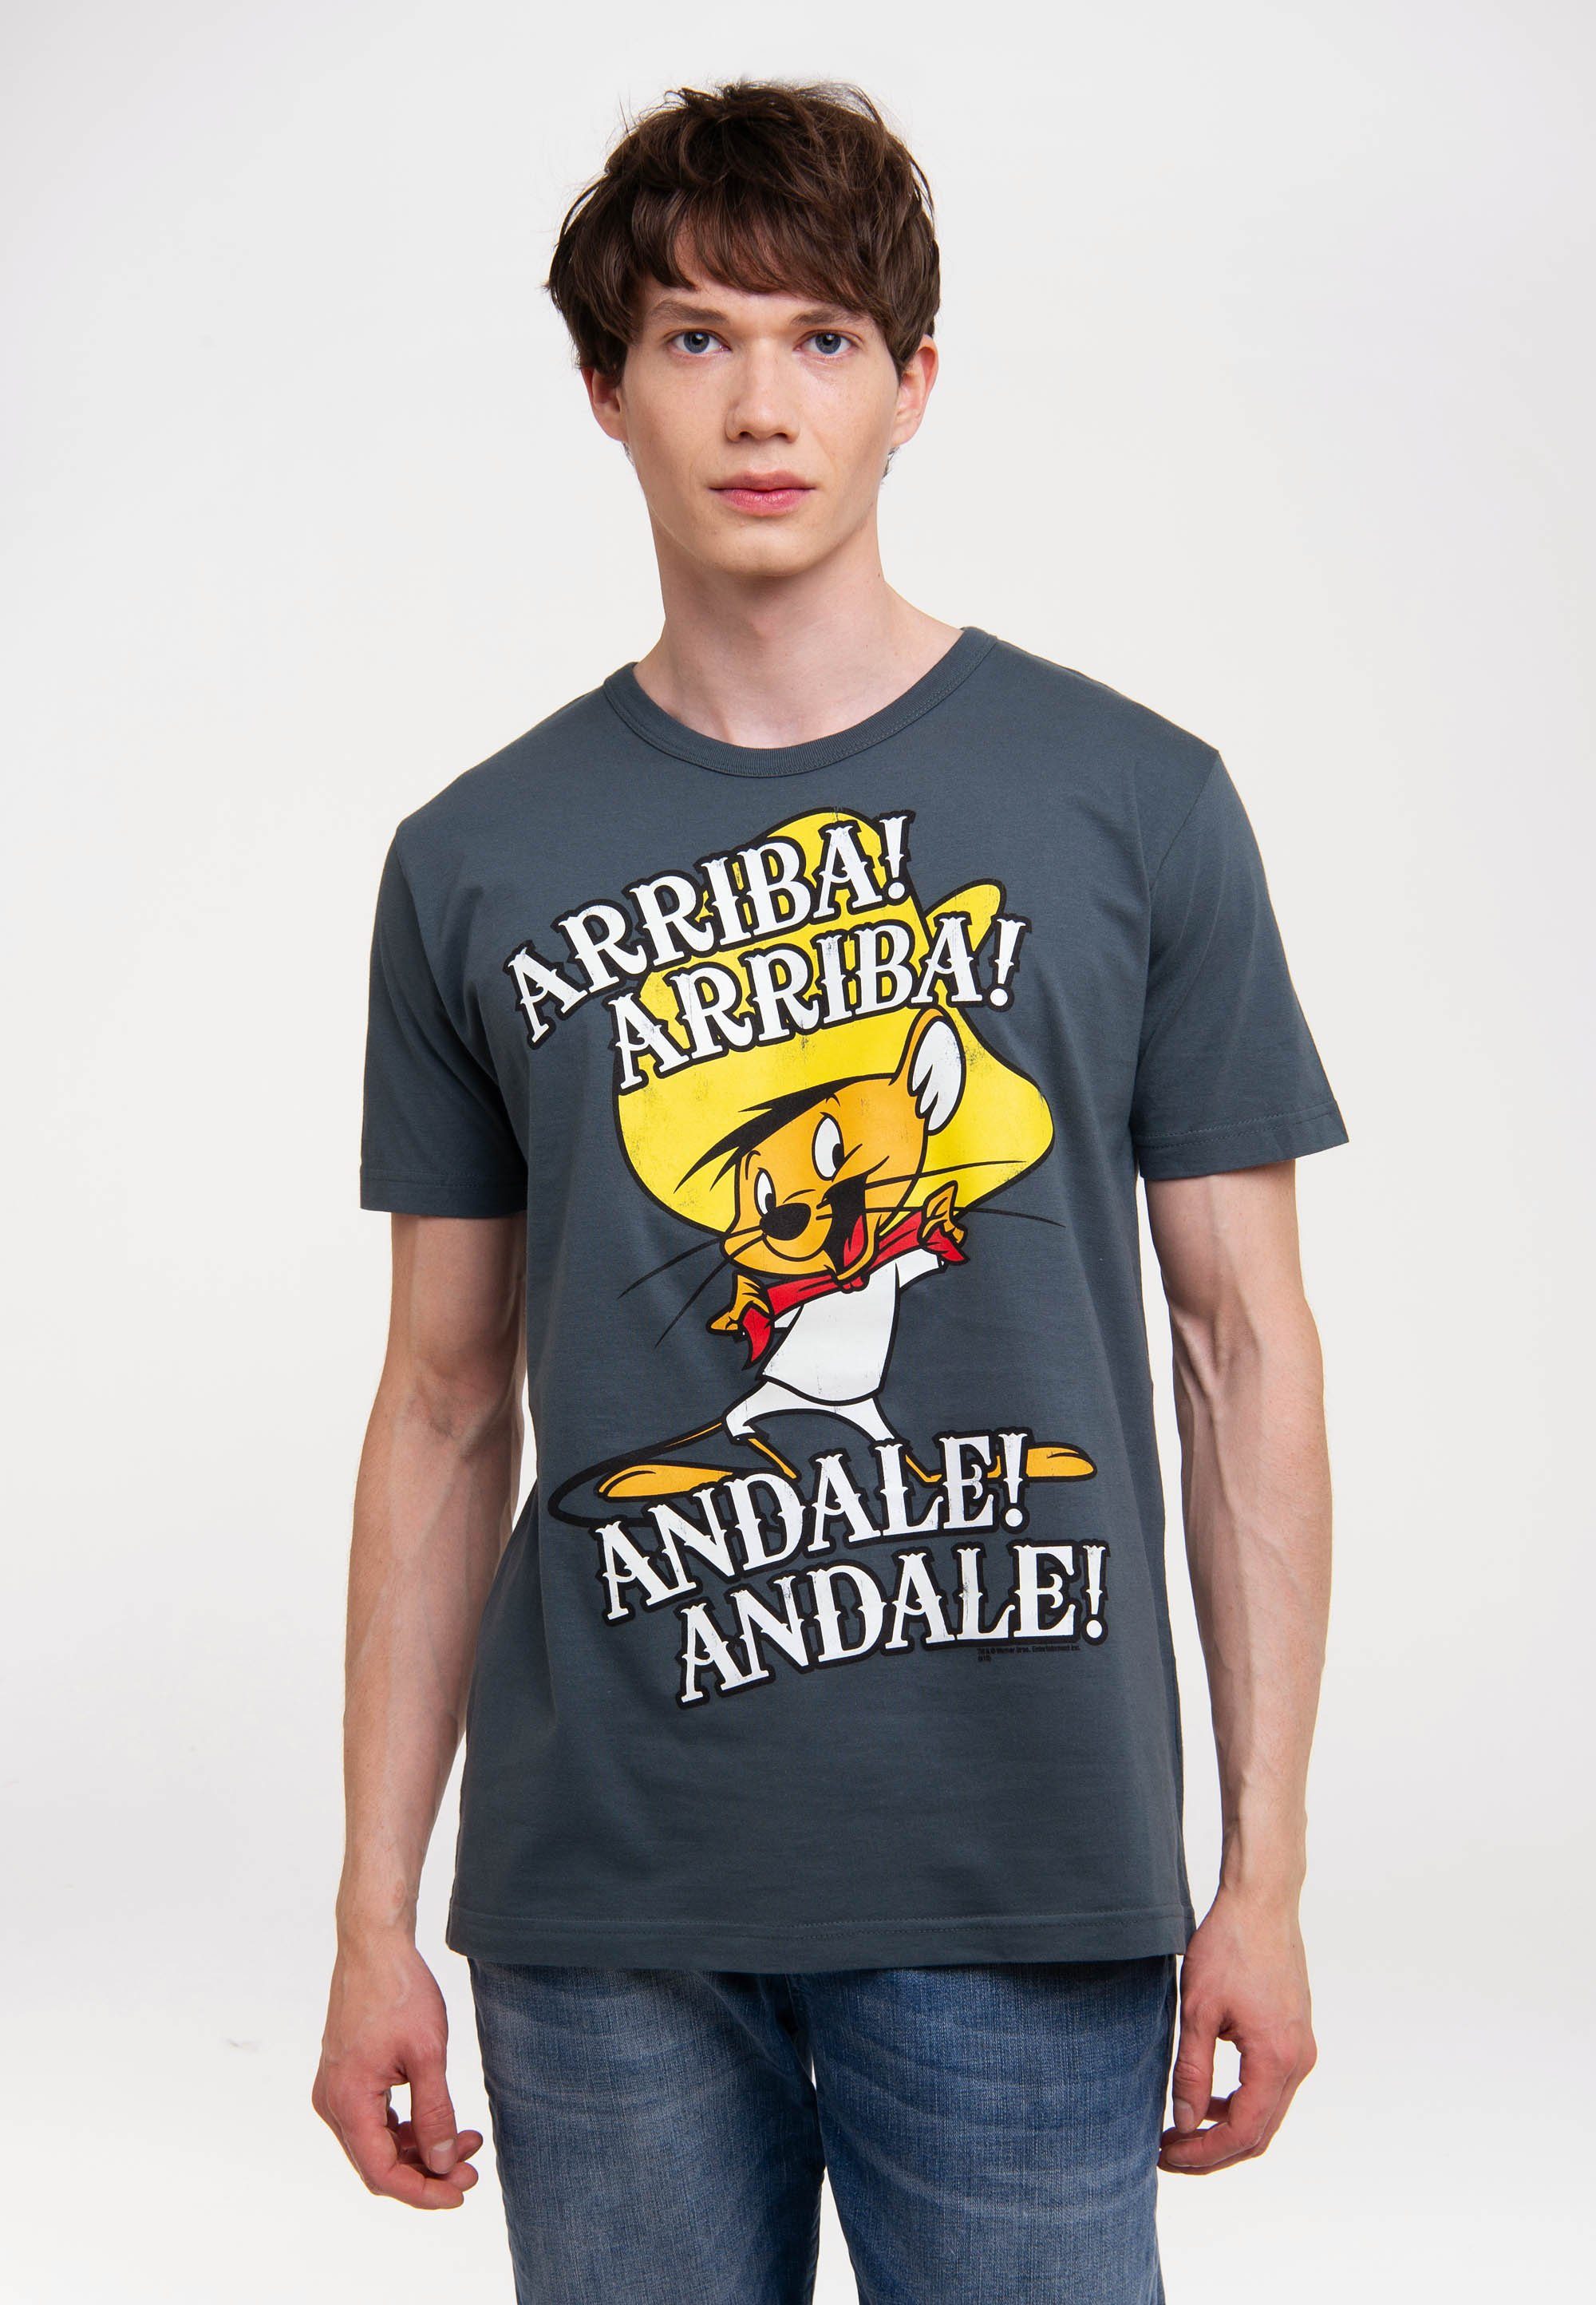 Arriba! mit LOGOSHIRT - Gonzales Speedy stahlblau Gonzales Print Speedy T-Shirt -